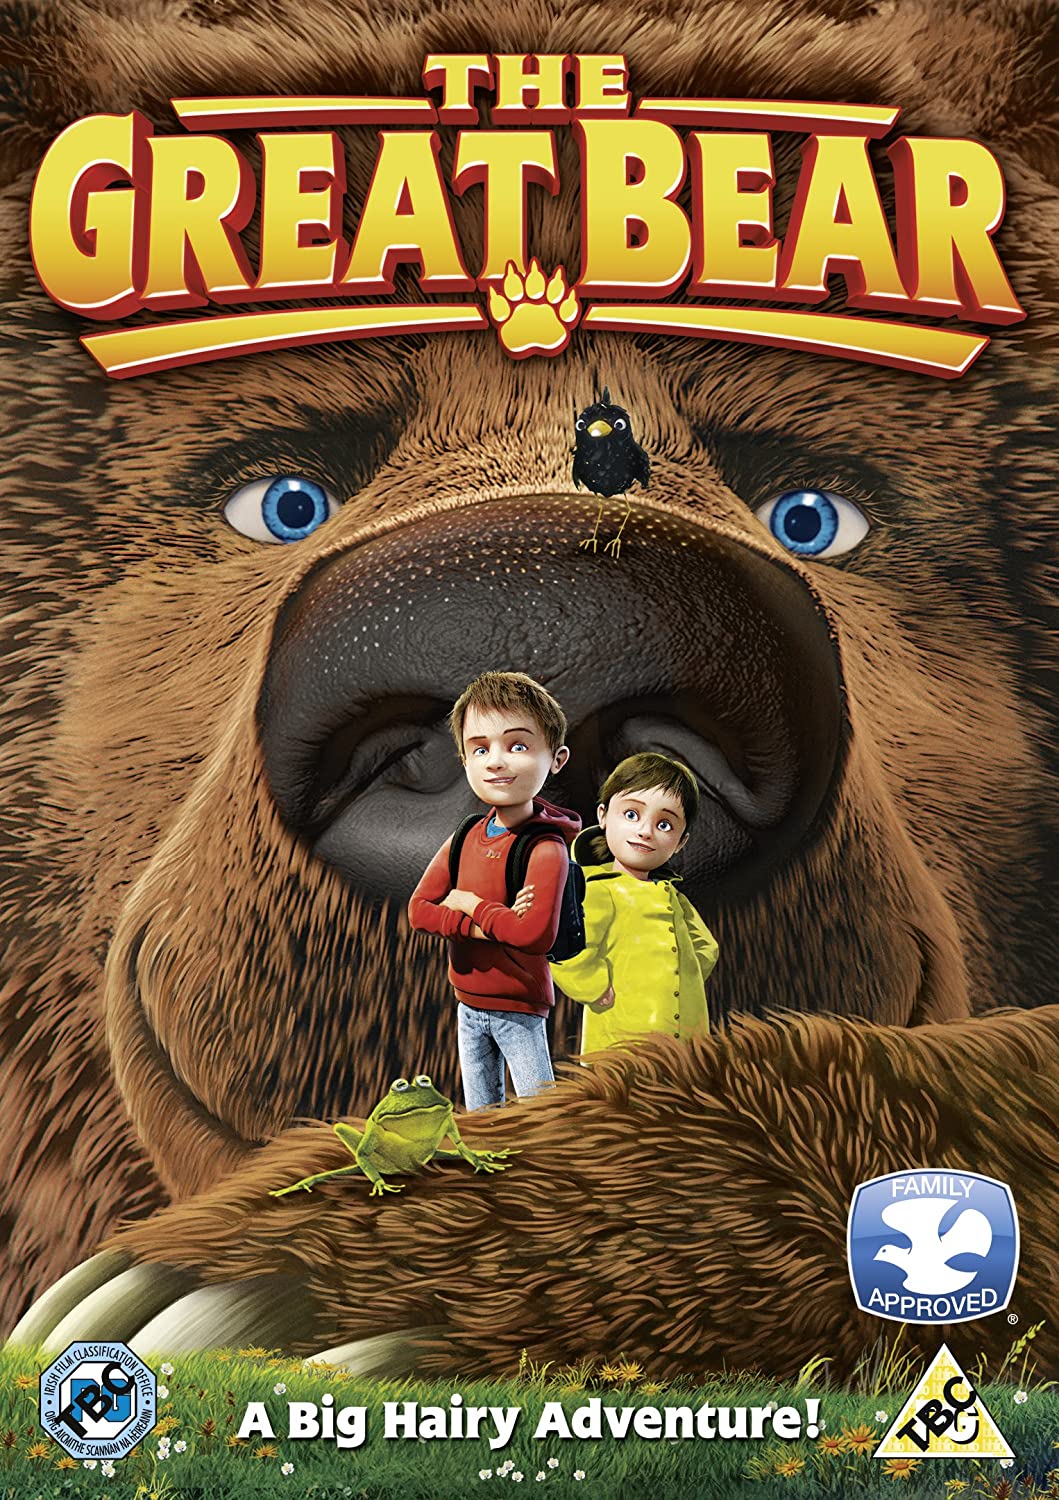 Der große Bär – Abenteuer/Familie [DVD]